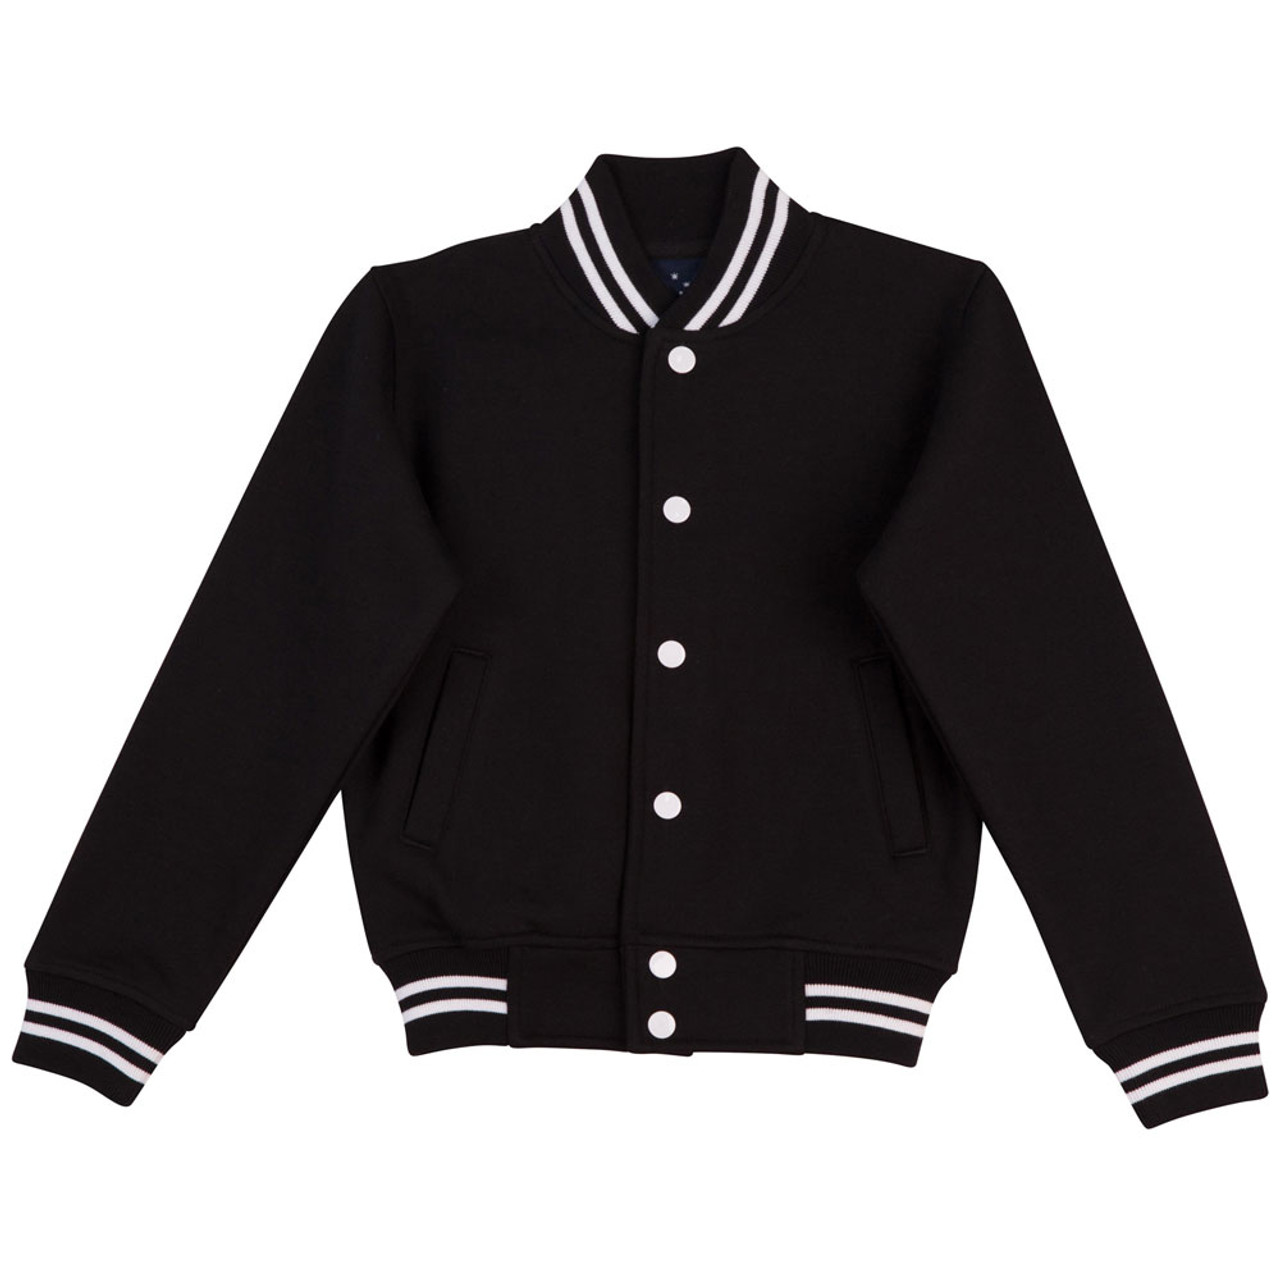 Adult/Youth Plain Varsity Jackets | college team uniforms | wholesale ...